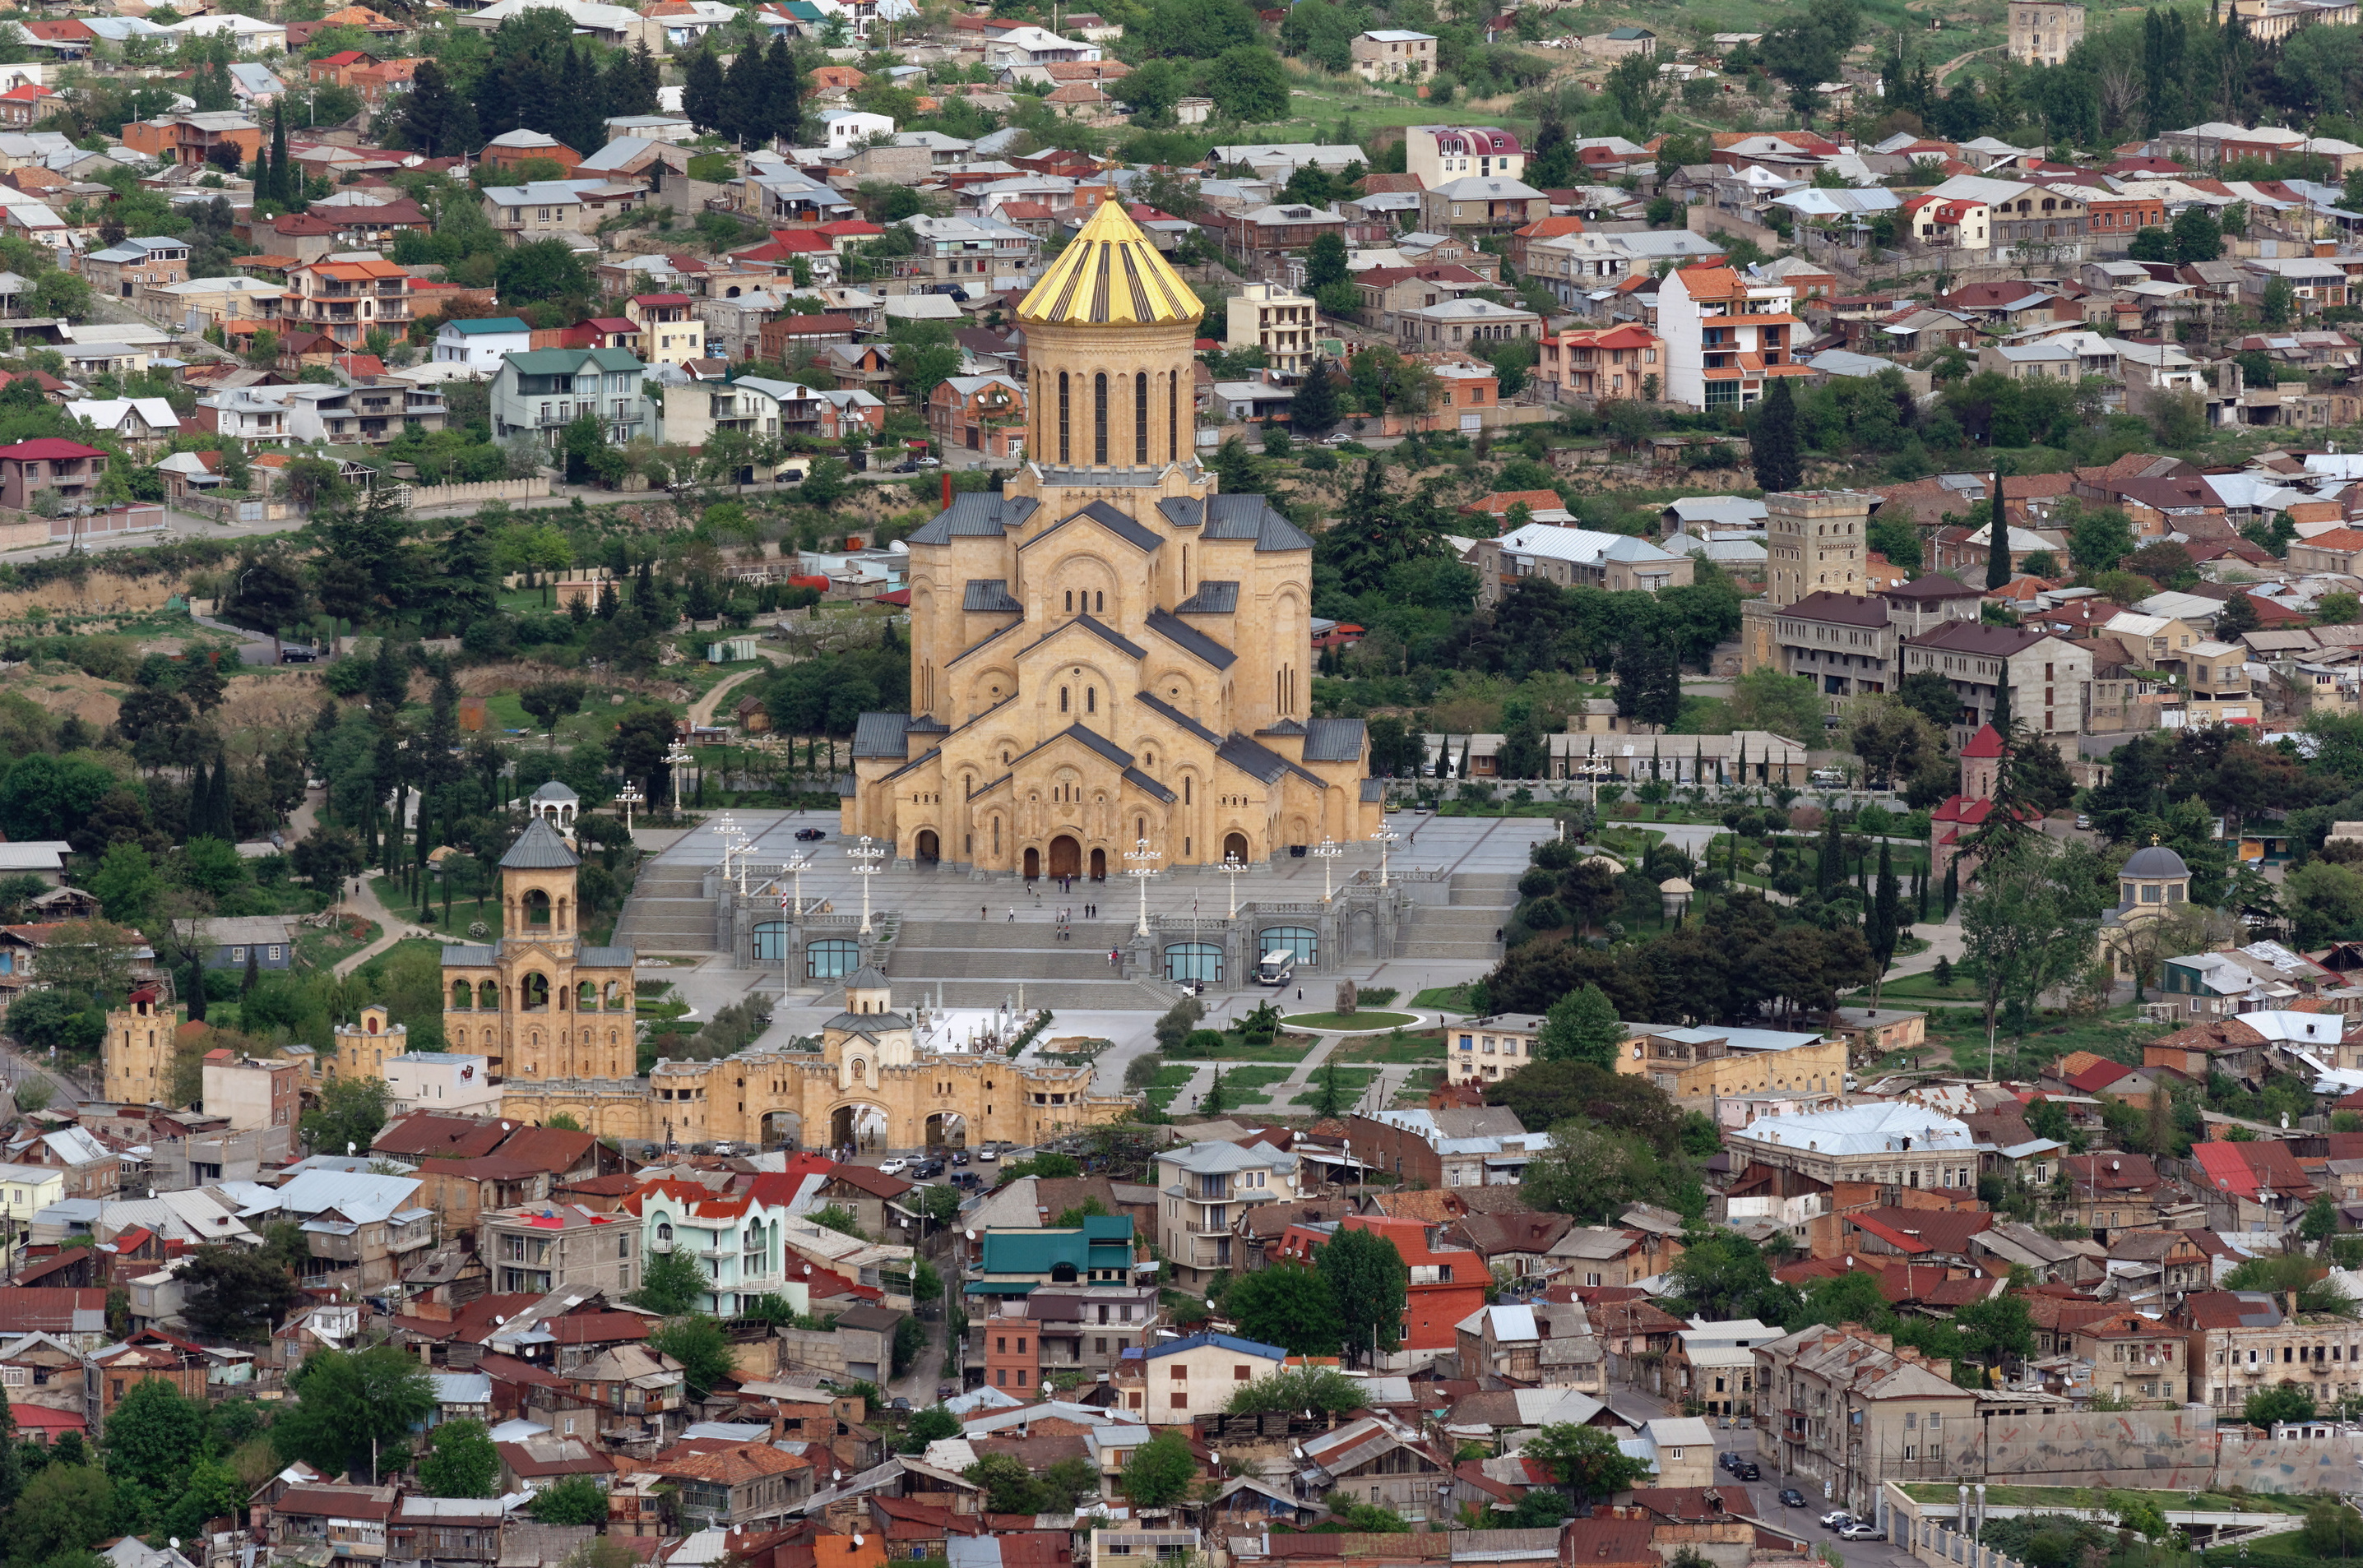 Tbilisi Holy Trinity Cathedral (Sameba) IMG 8951 1920